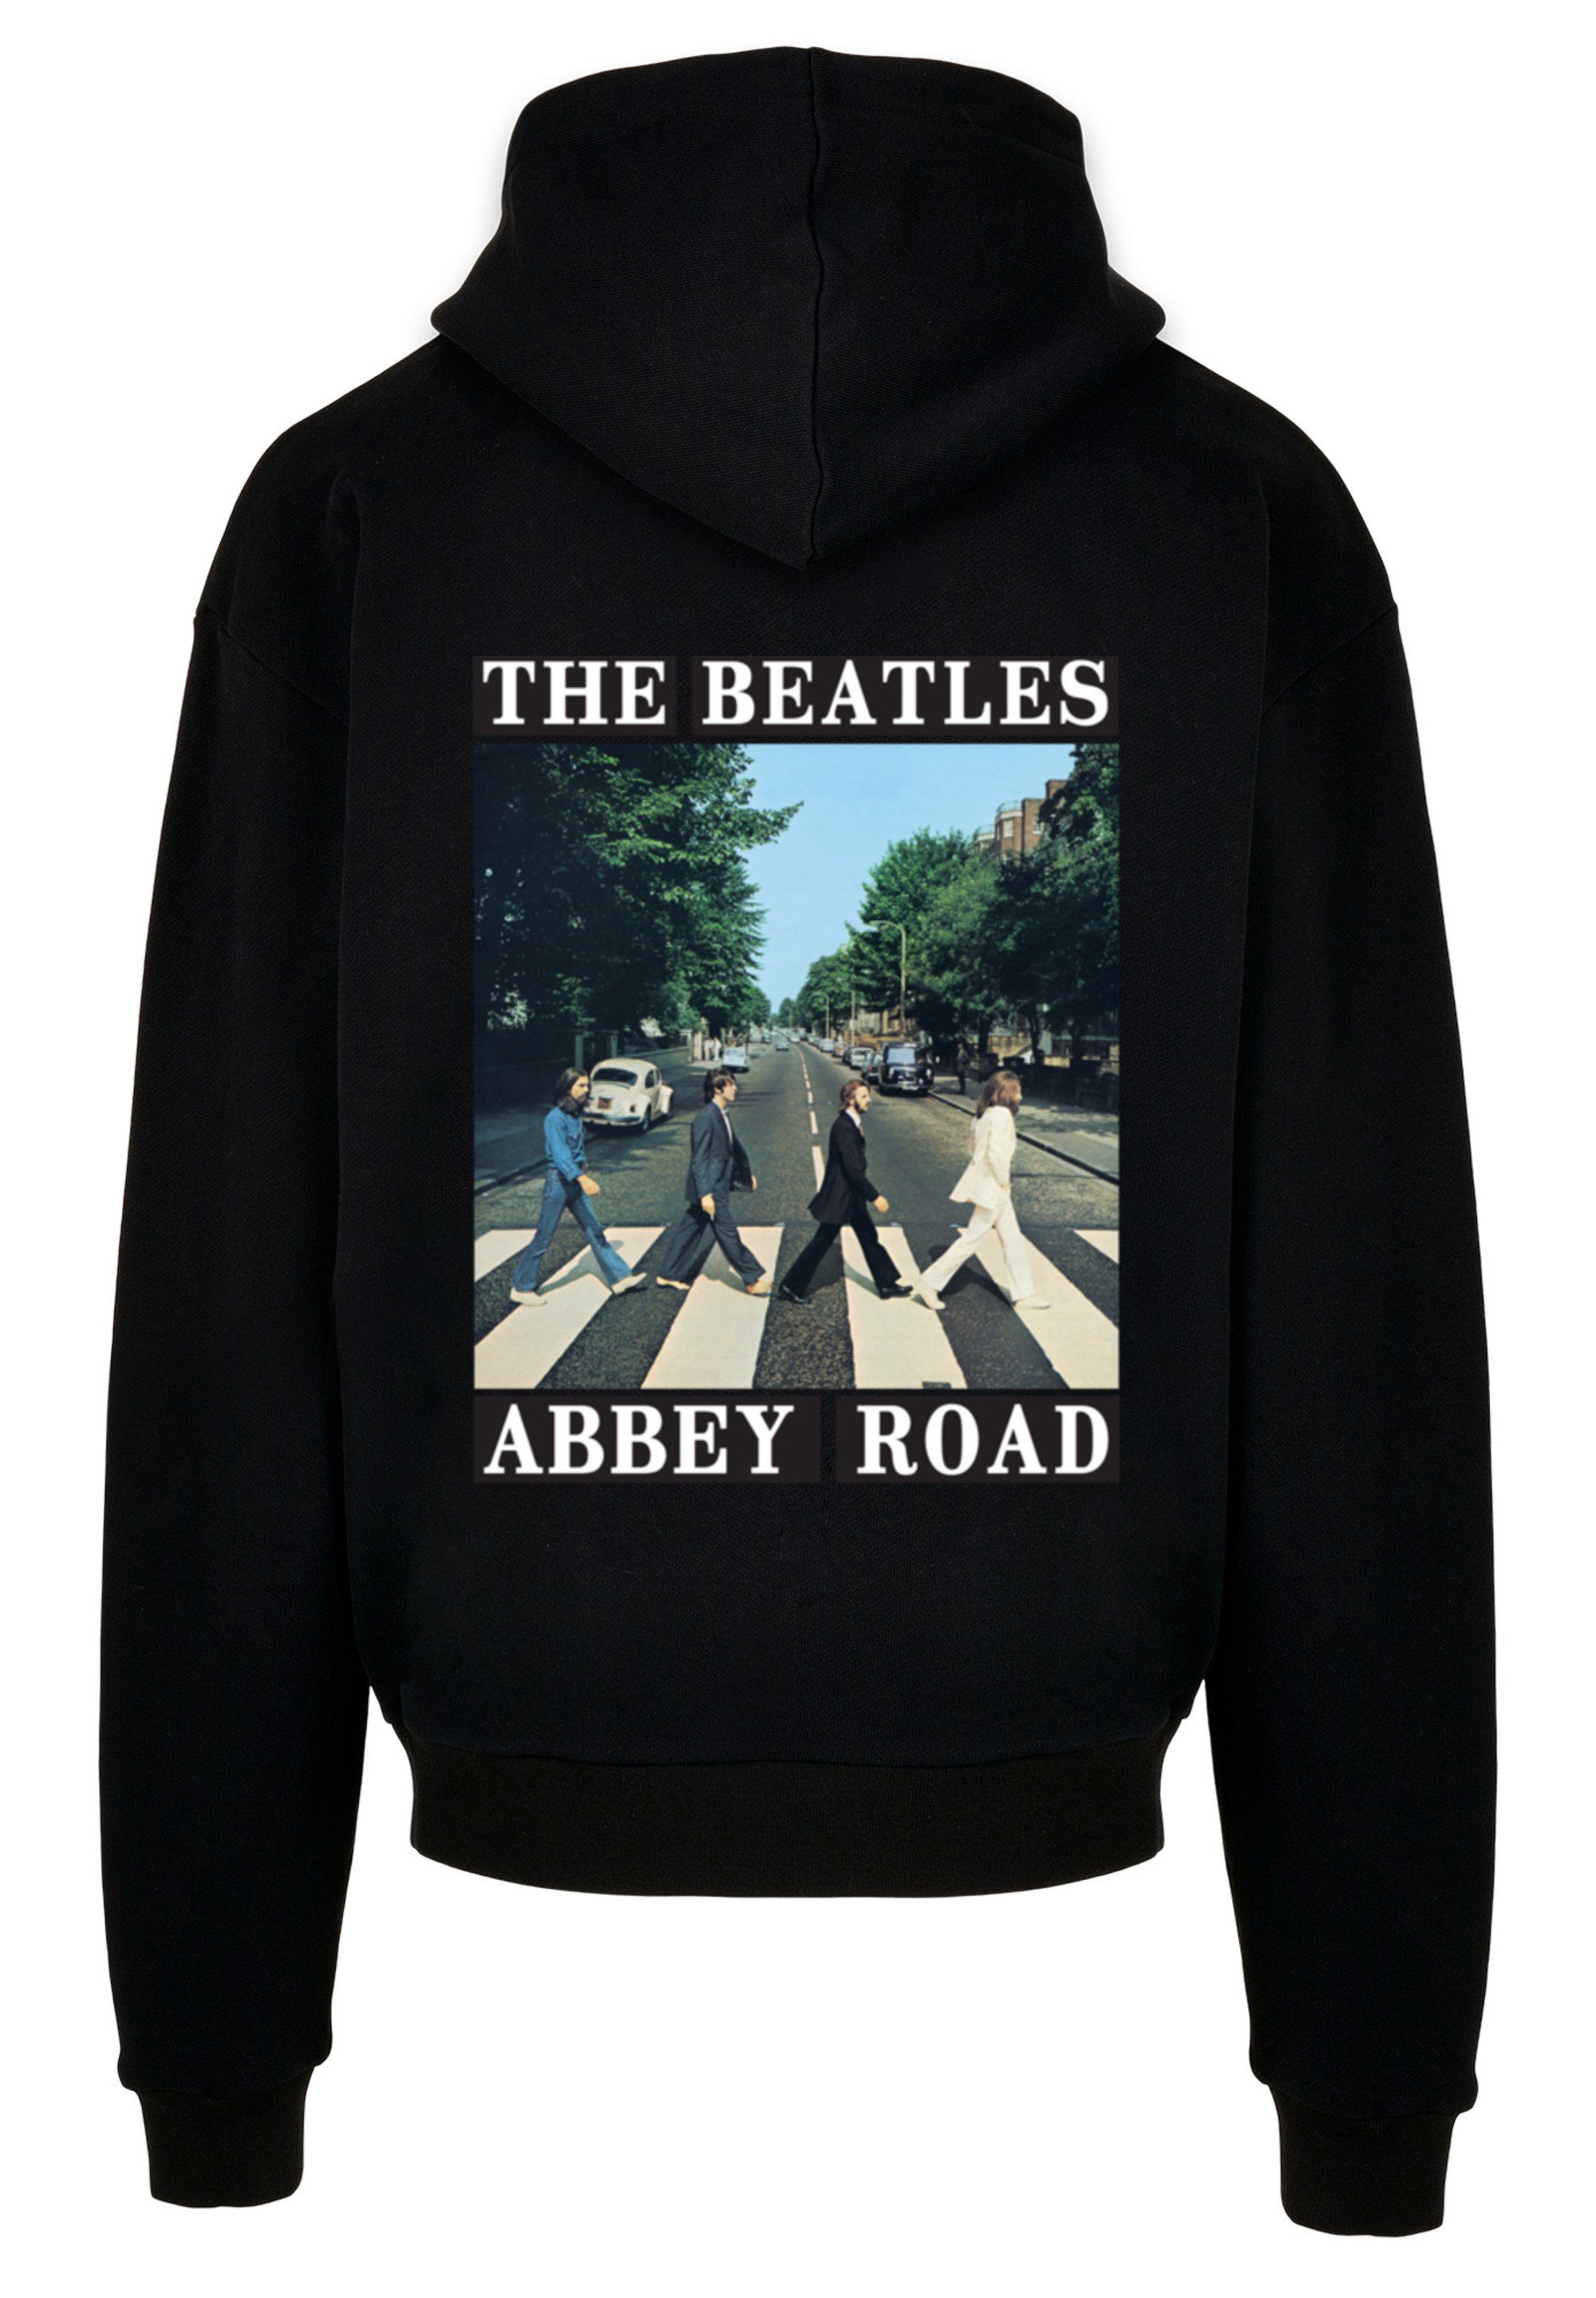 F4NT4STIC Kapuzenpullover The Beatles S cm Print, ist Model Das groß 180 Road und Abbey Größe Band trägt